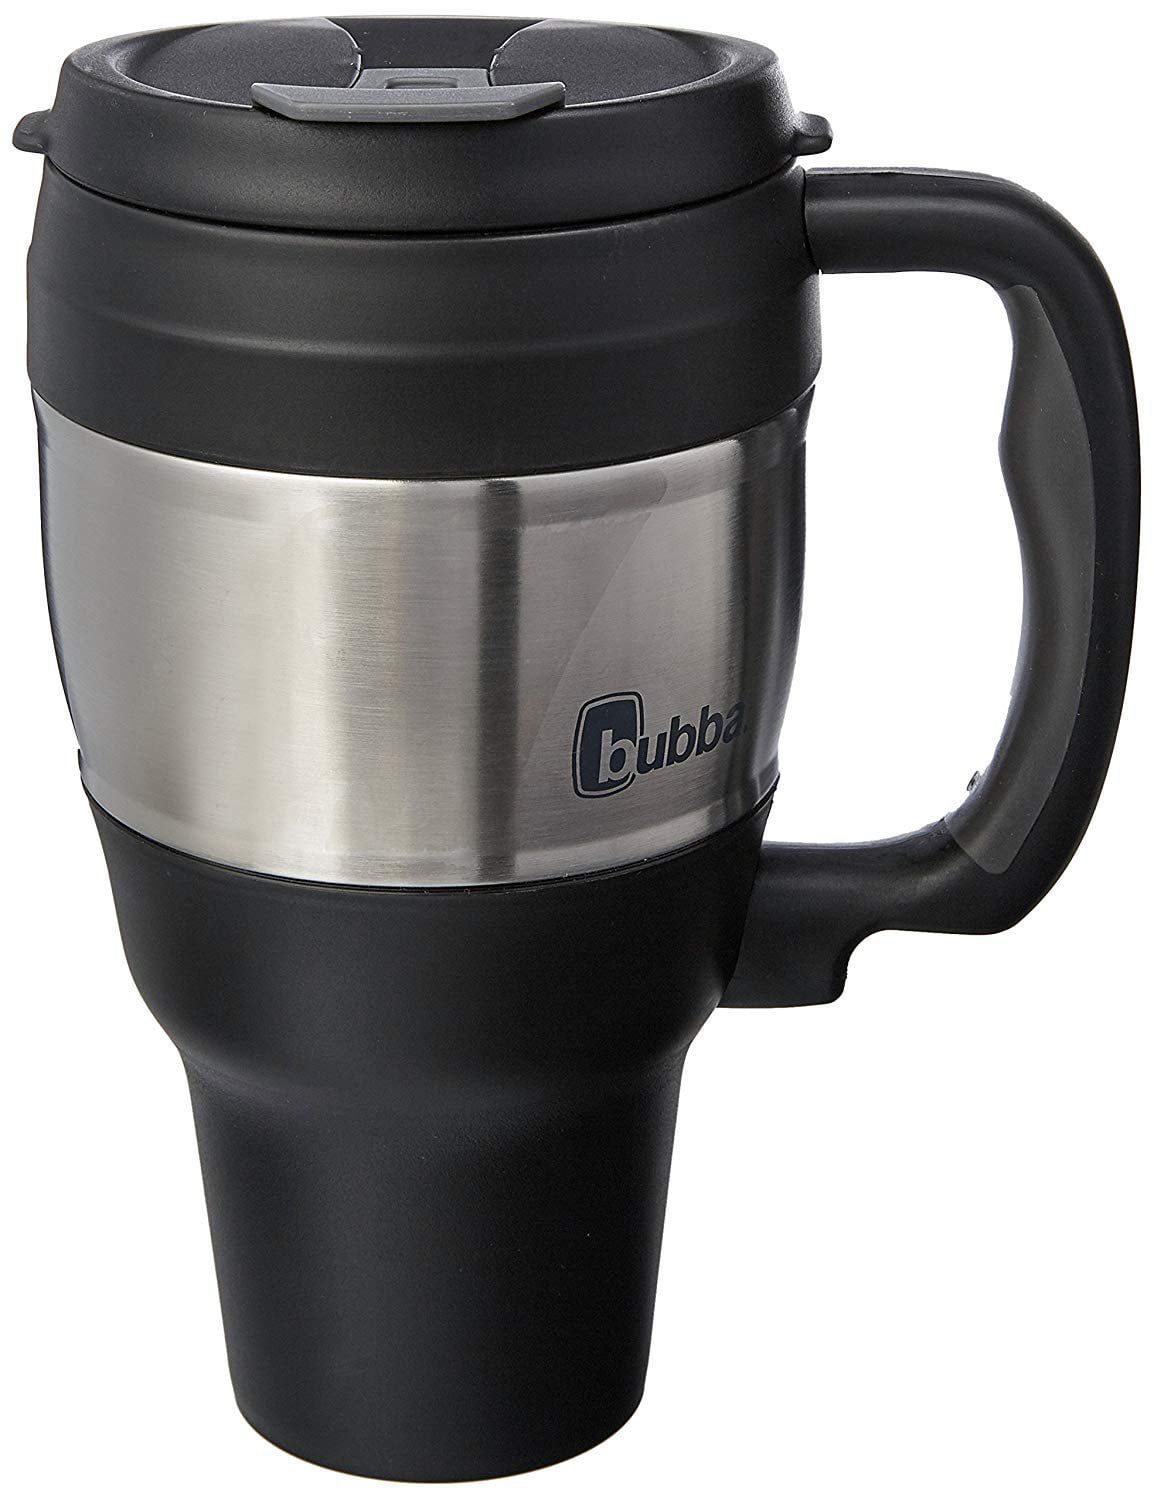 bubba plastic travel mug